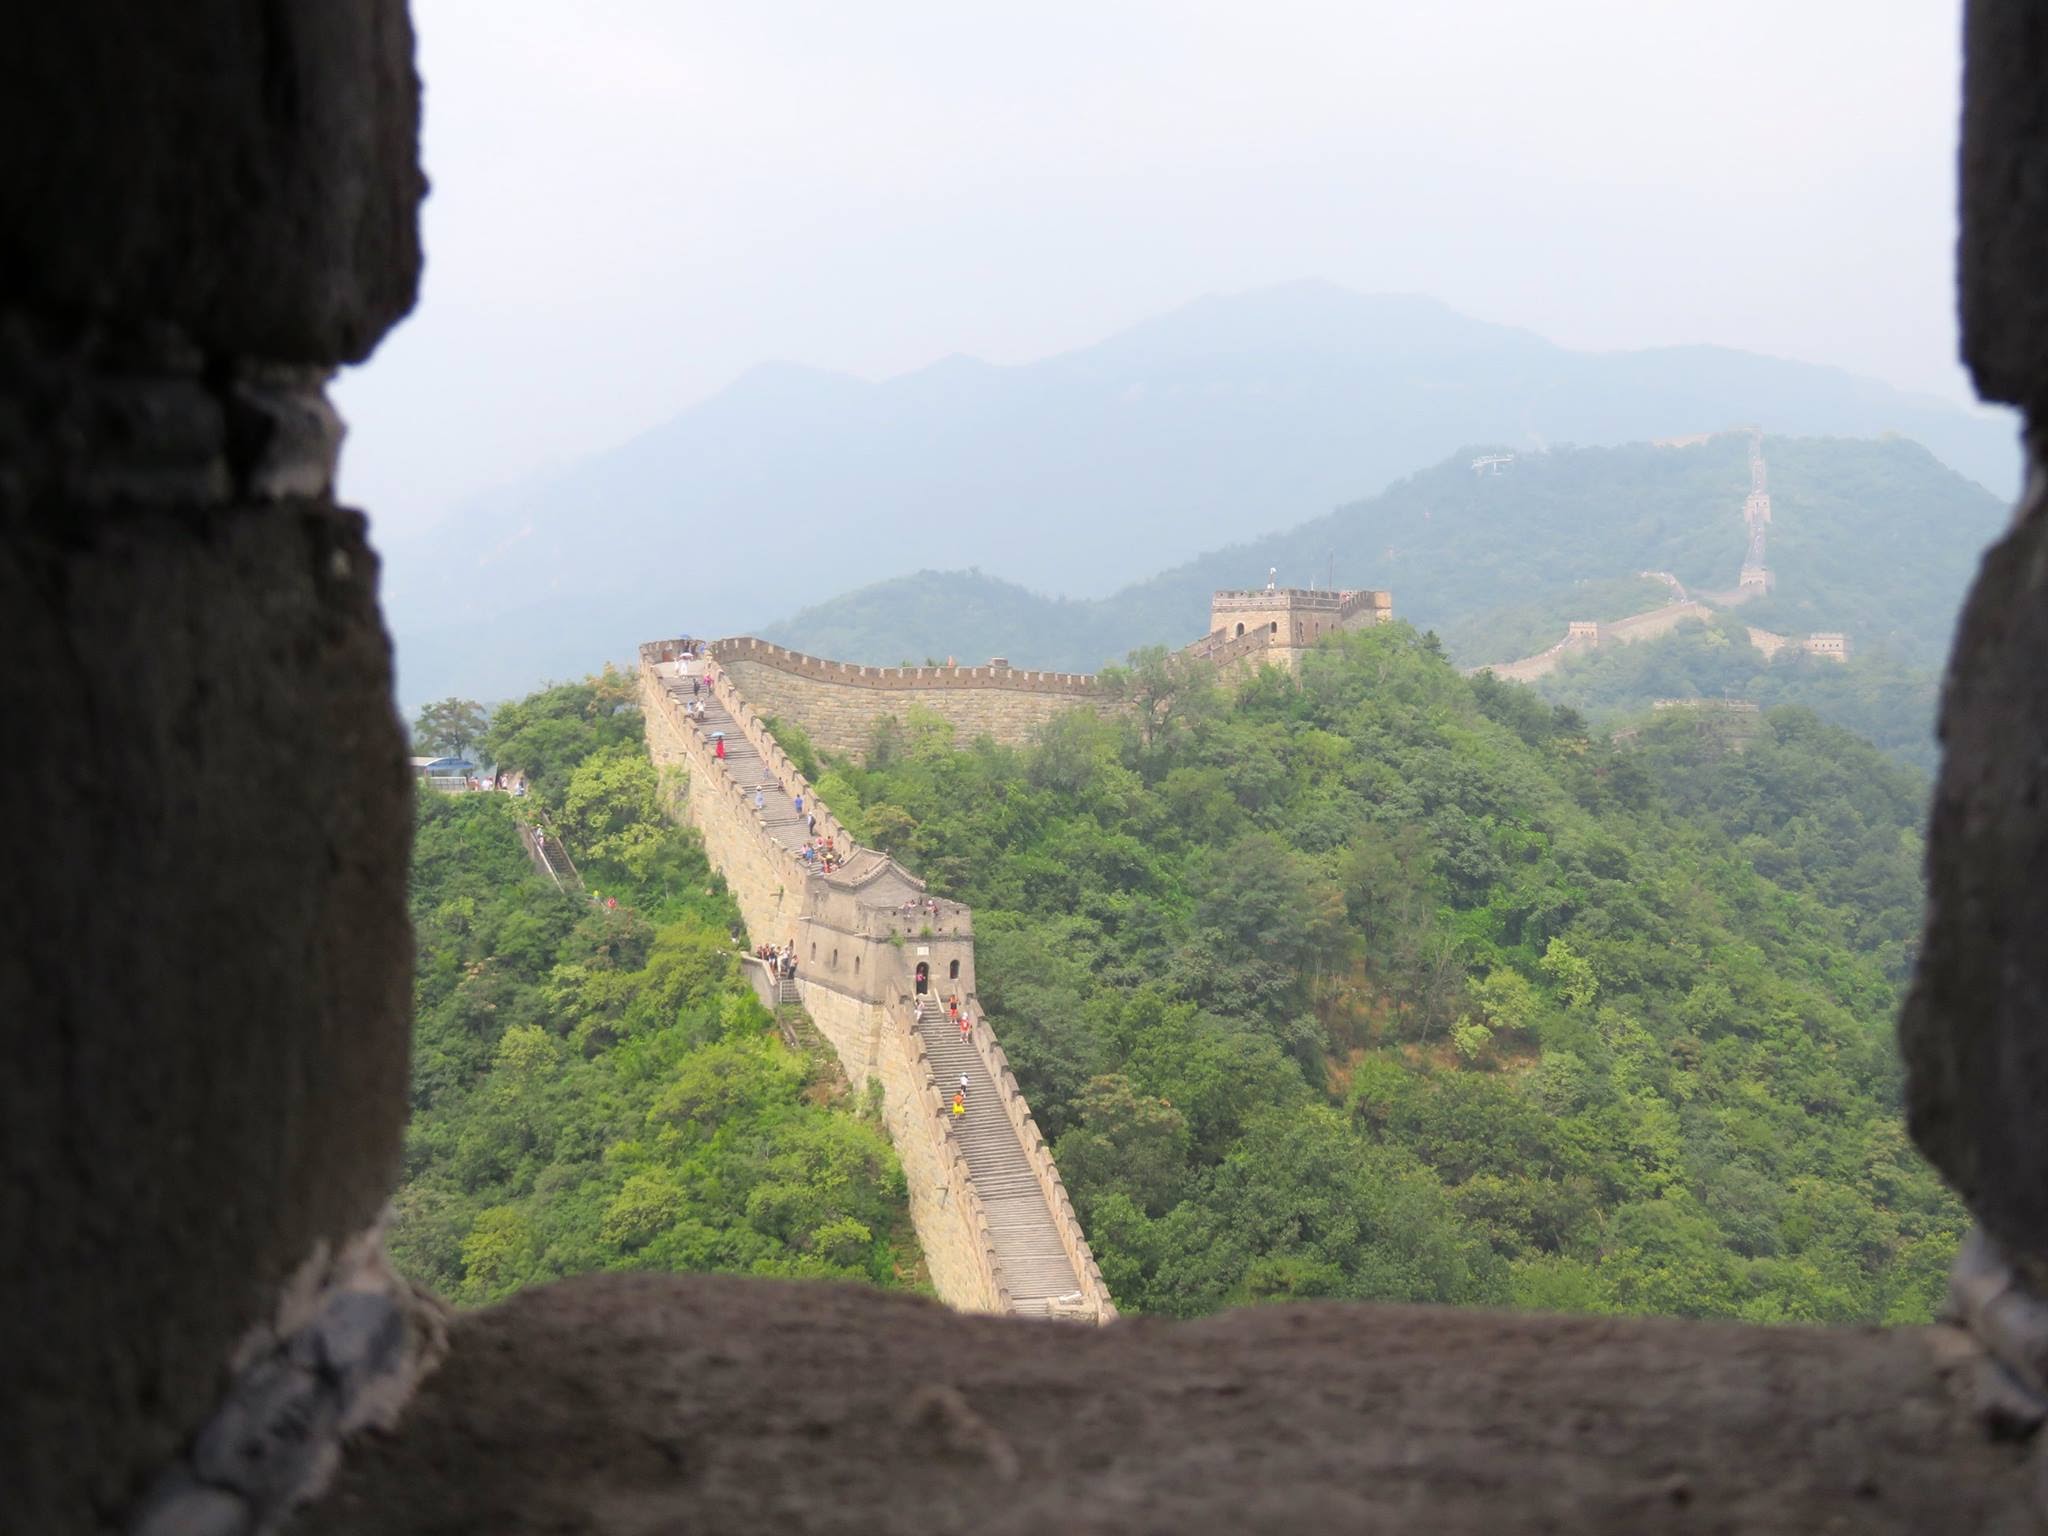 Mutianyu Section of the Great Wall Beijing trip 2017